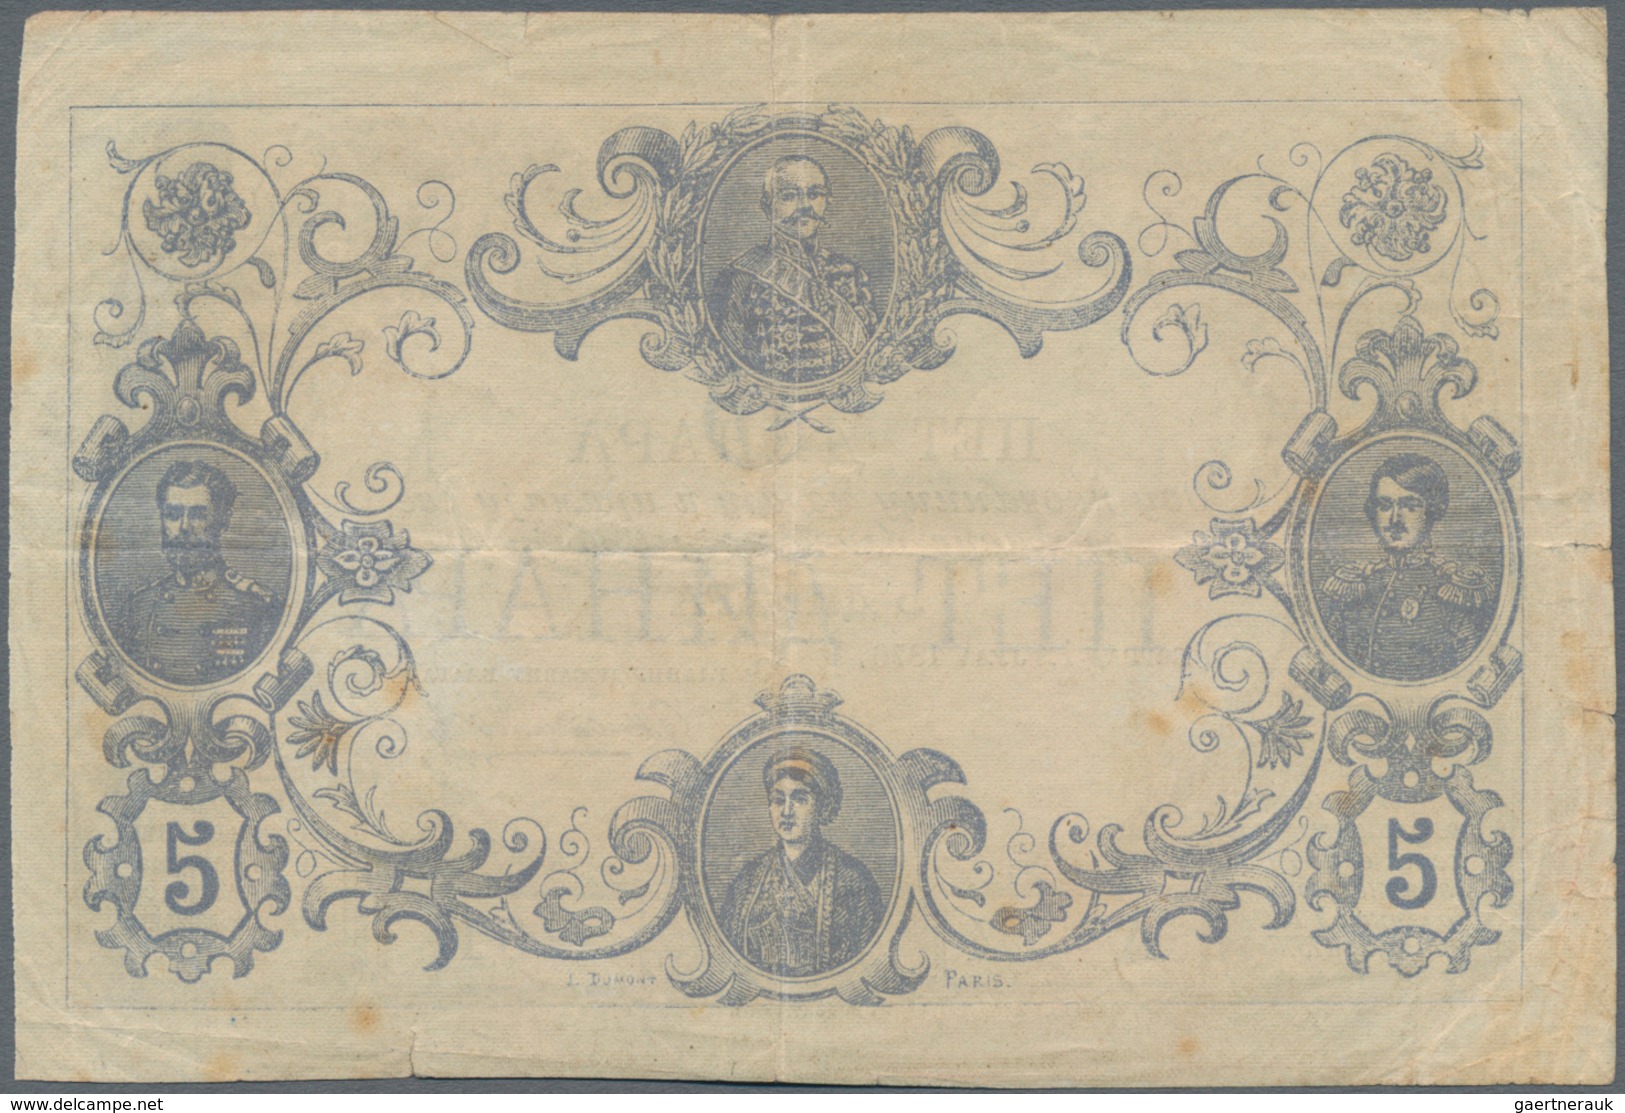 Serbia / Serbien: Kingdom Of Serbia 5 Dinara 1876, P.2, Still Nice And Rare Banknote With A Few Fold - Serbia